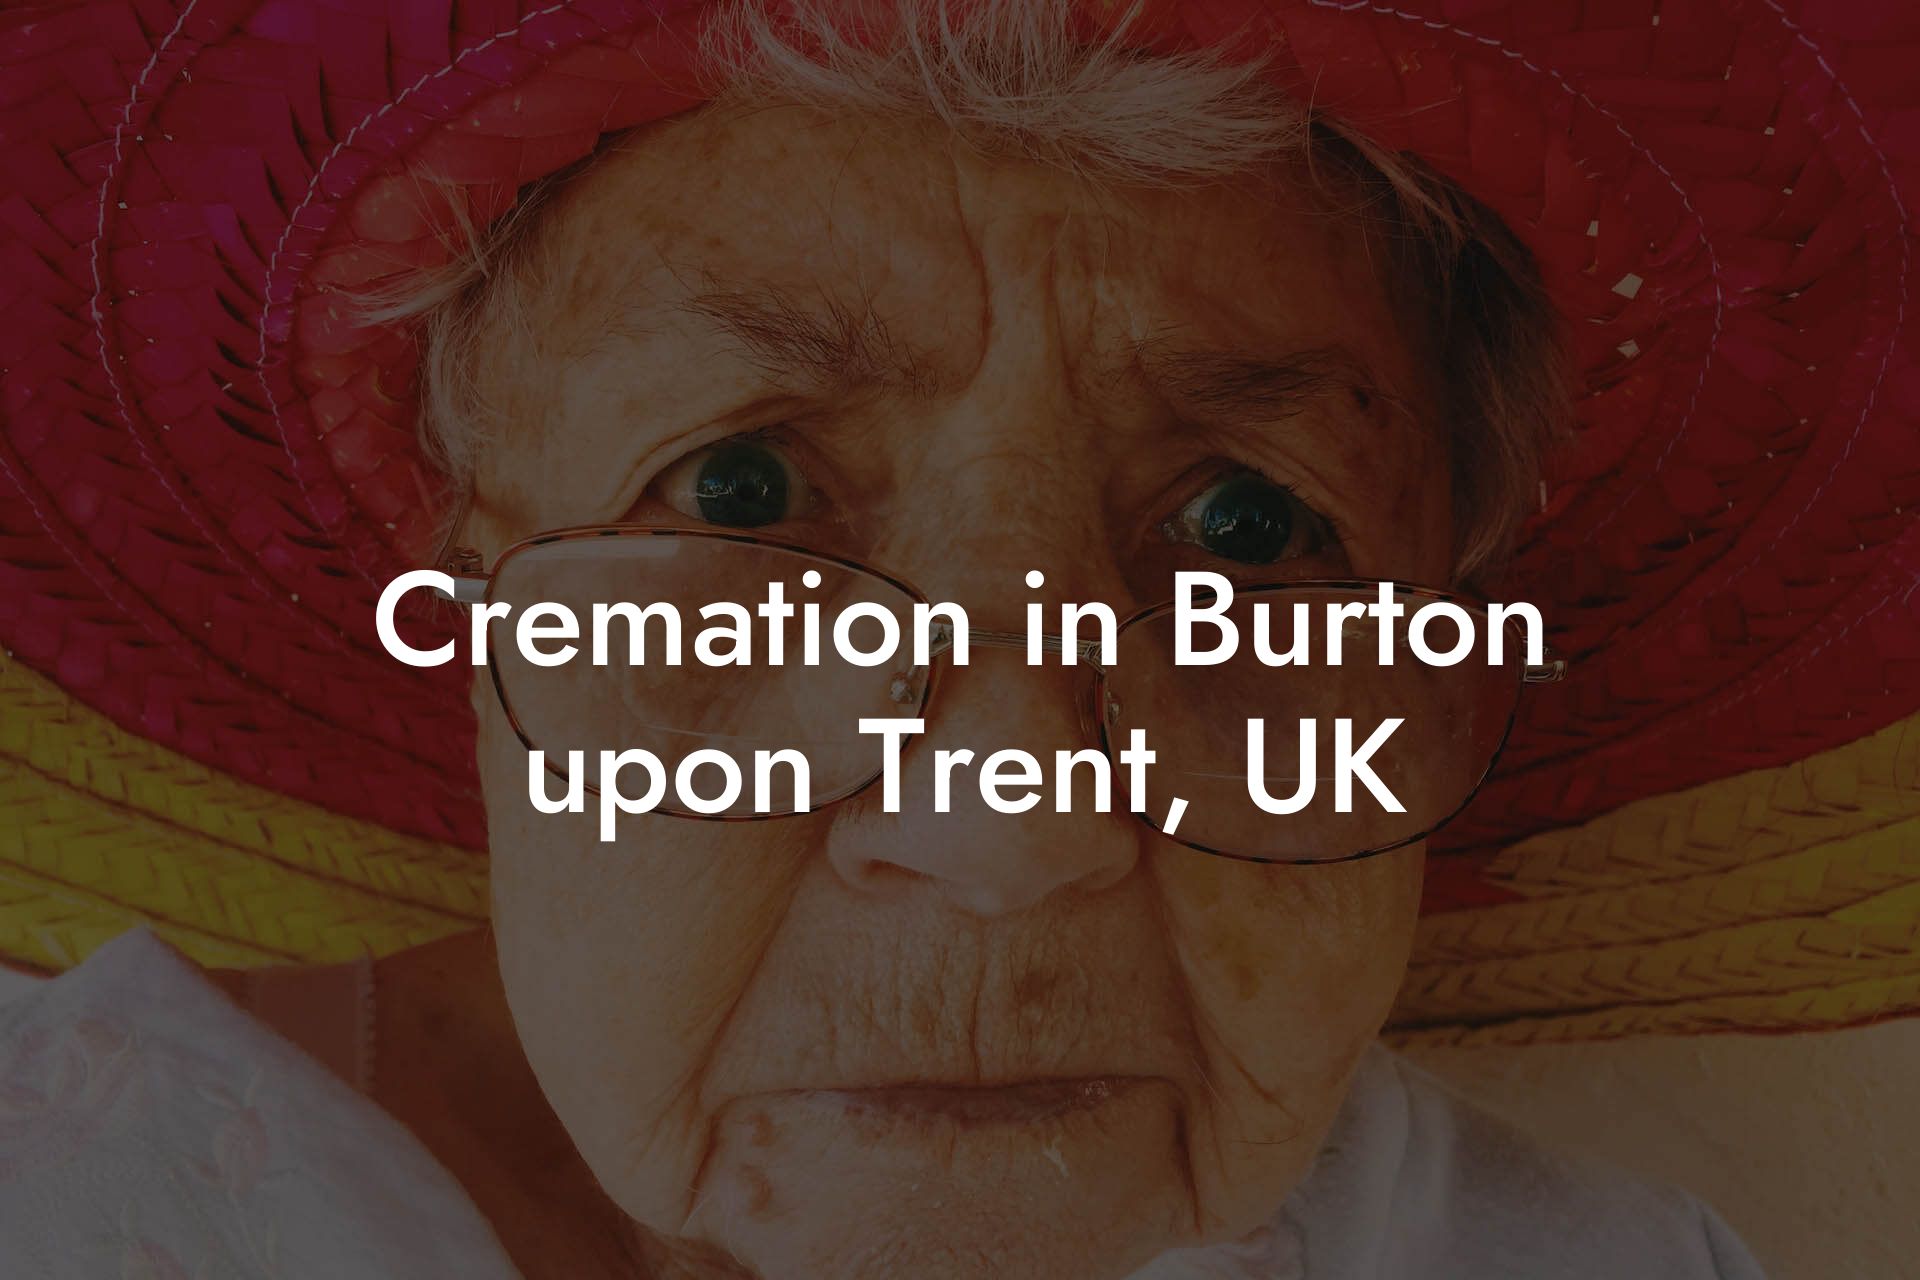 Cremation in Burton upon Trent, UK